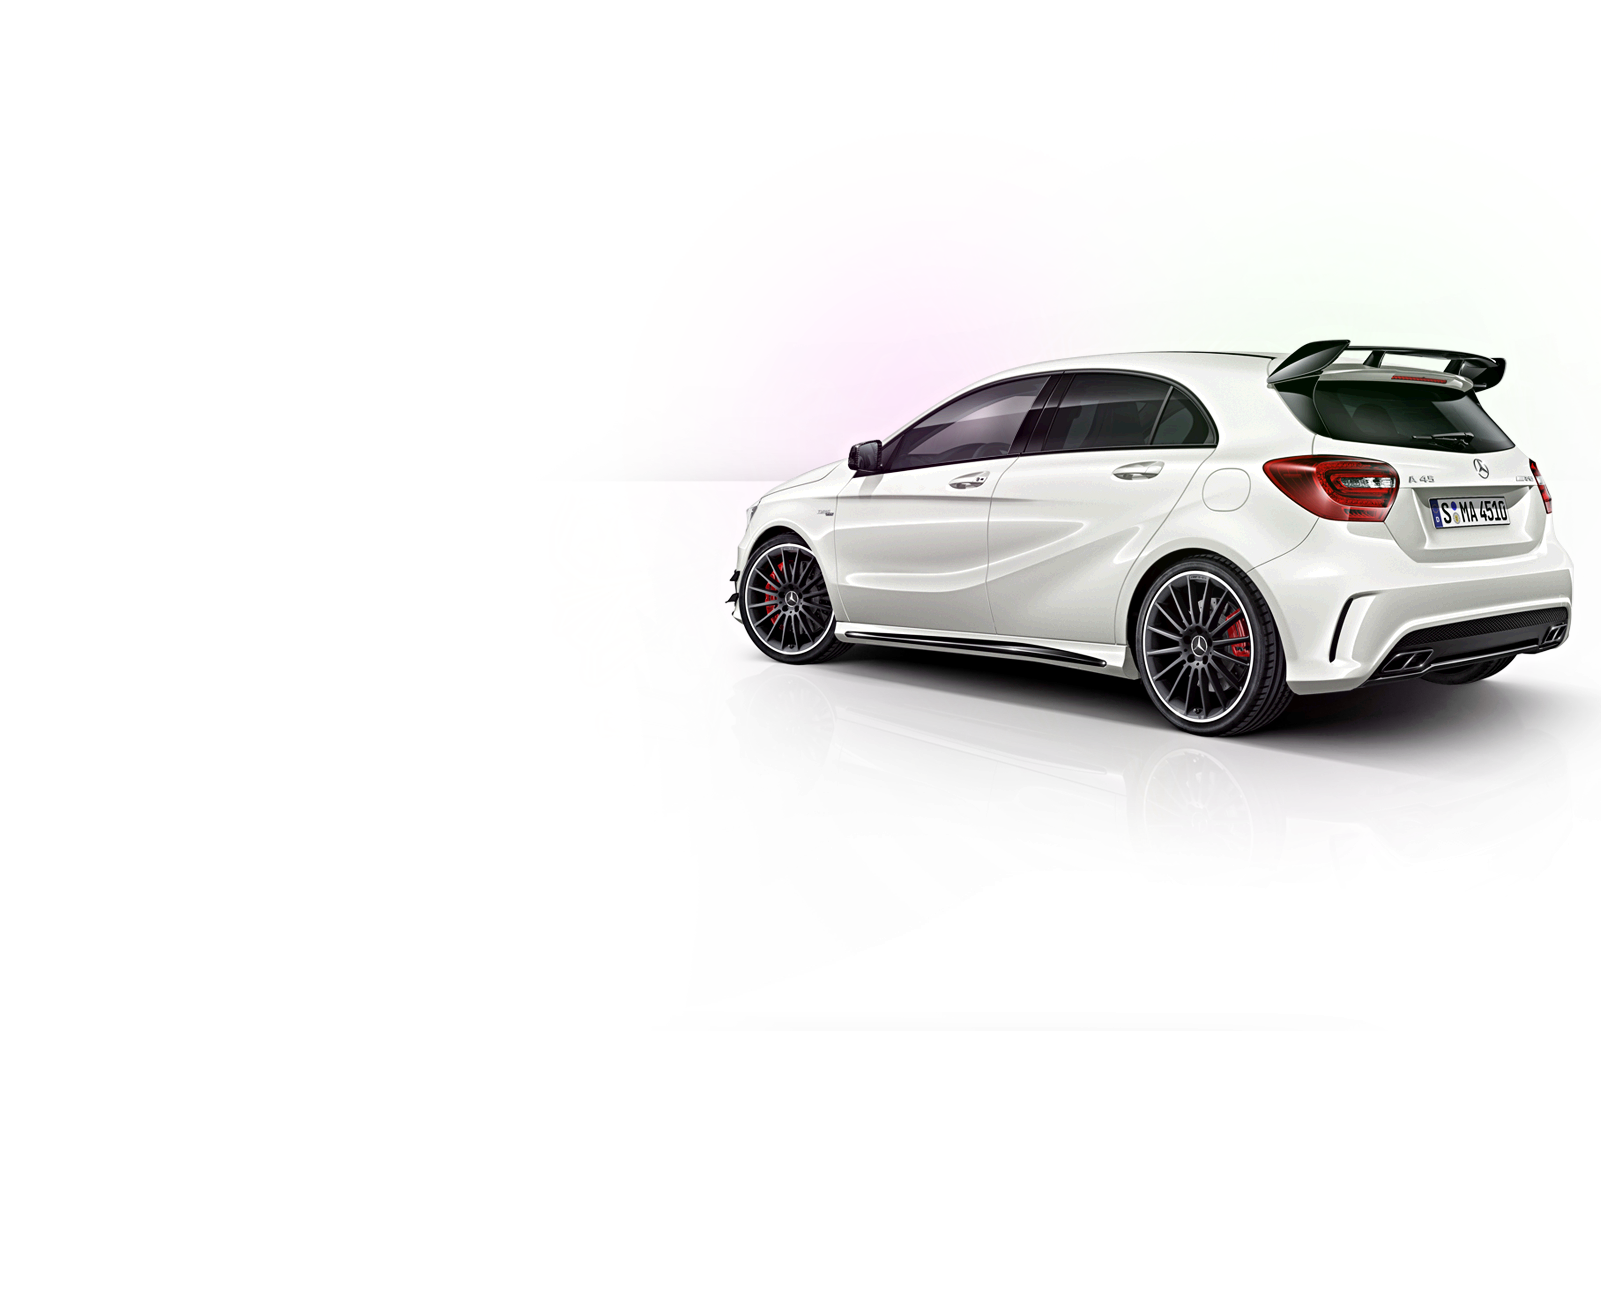 Mercedes PNG images Download 